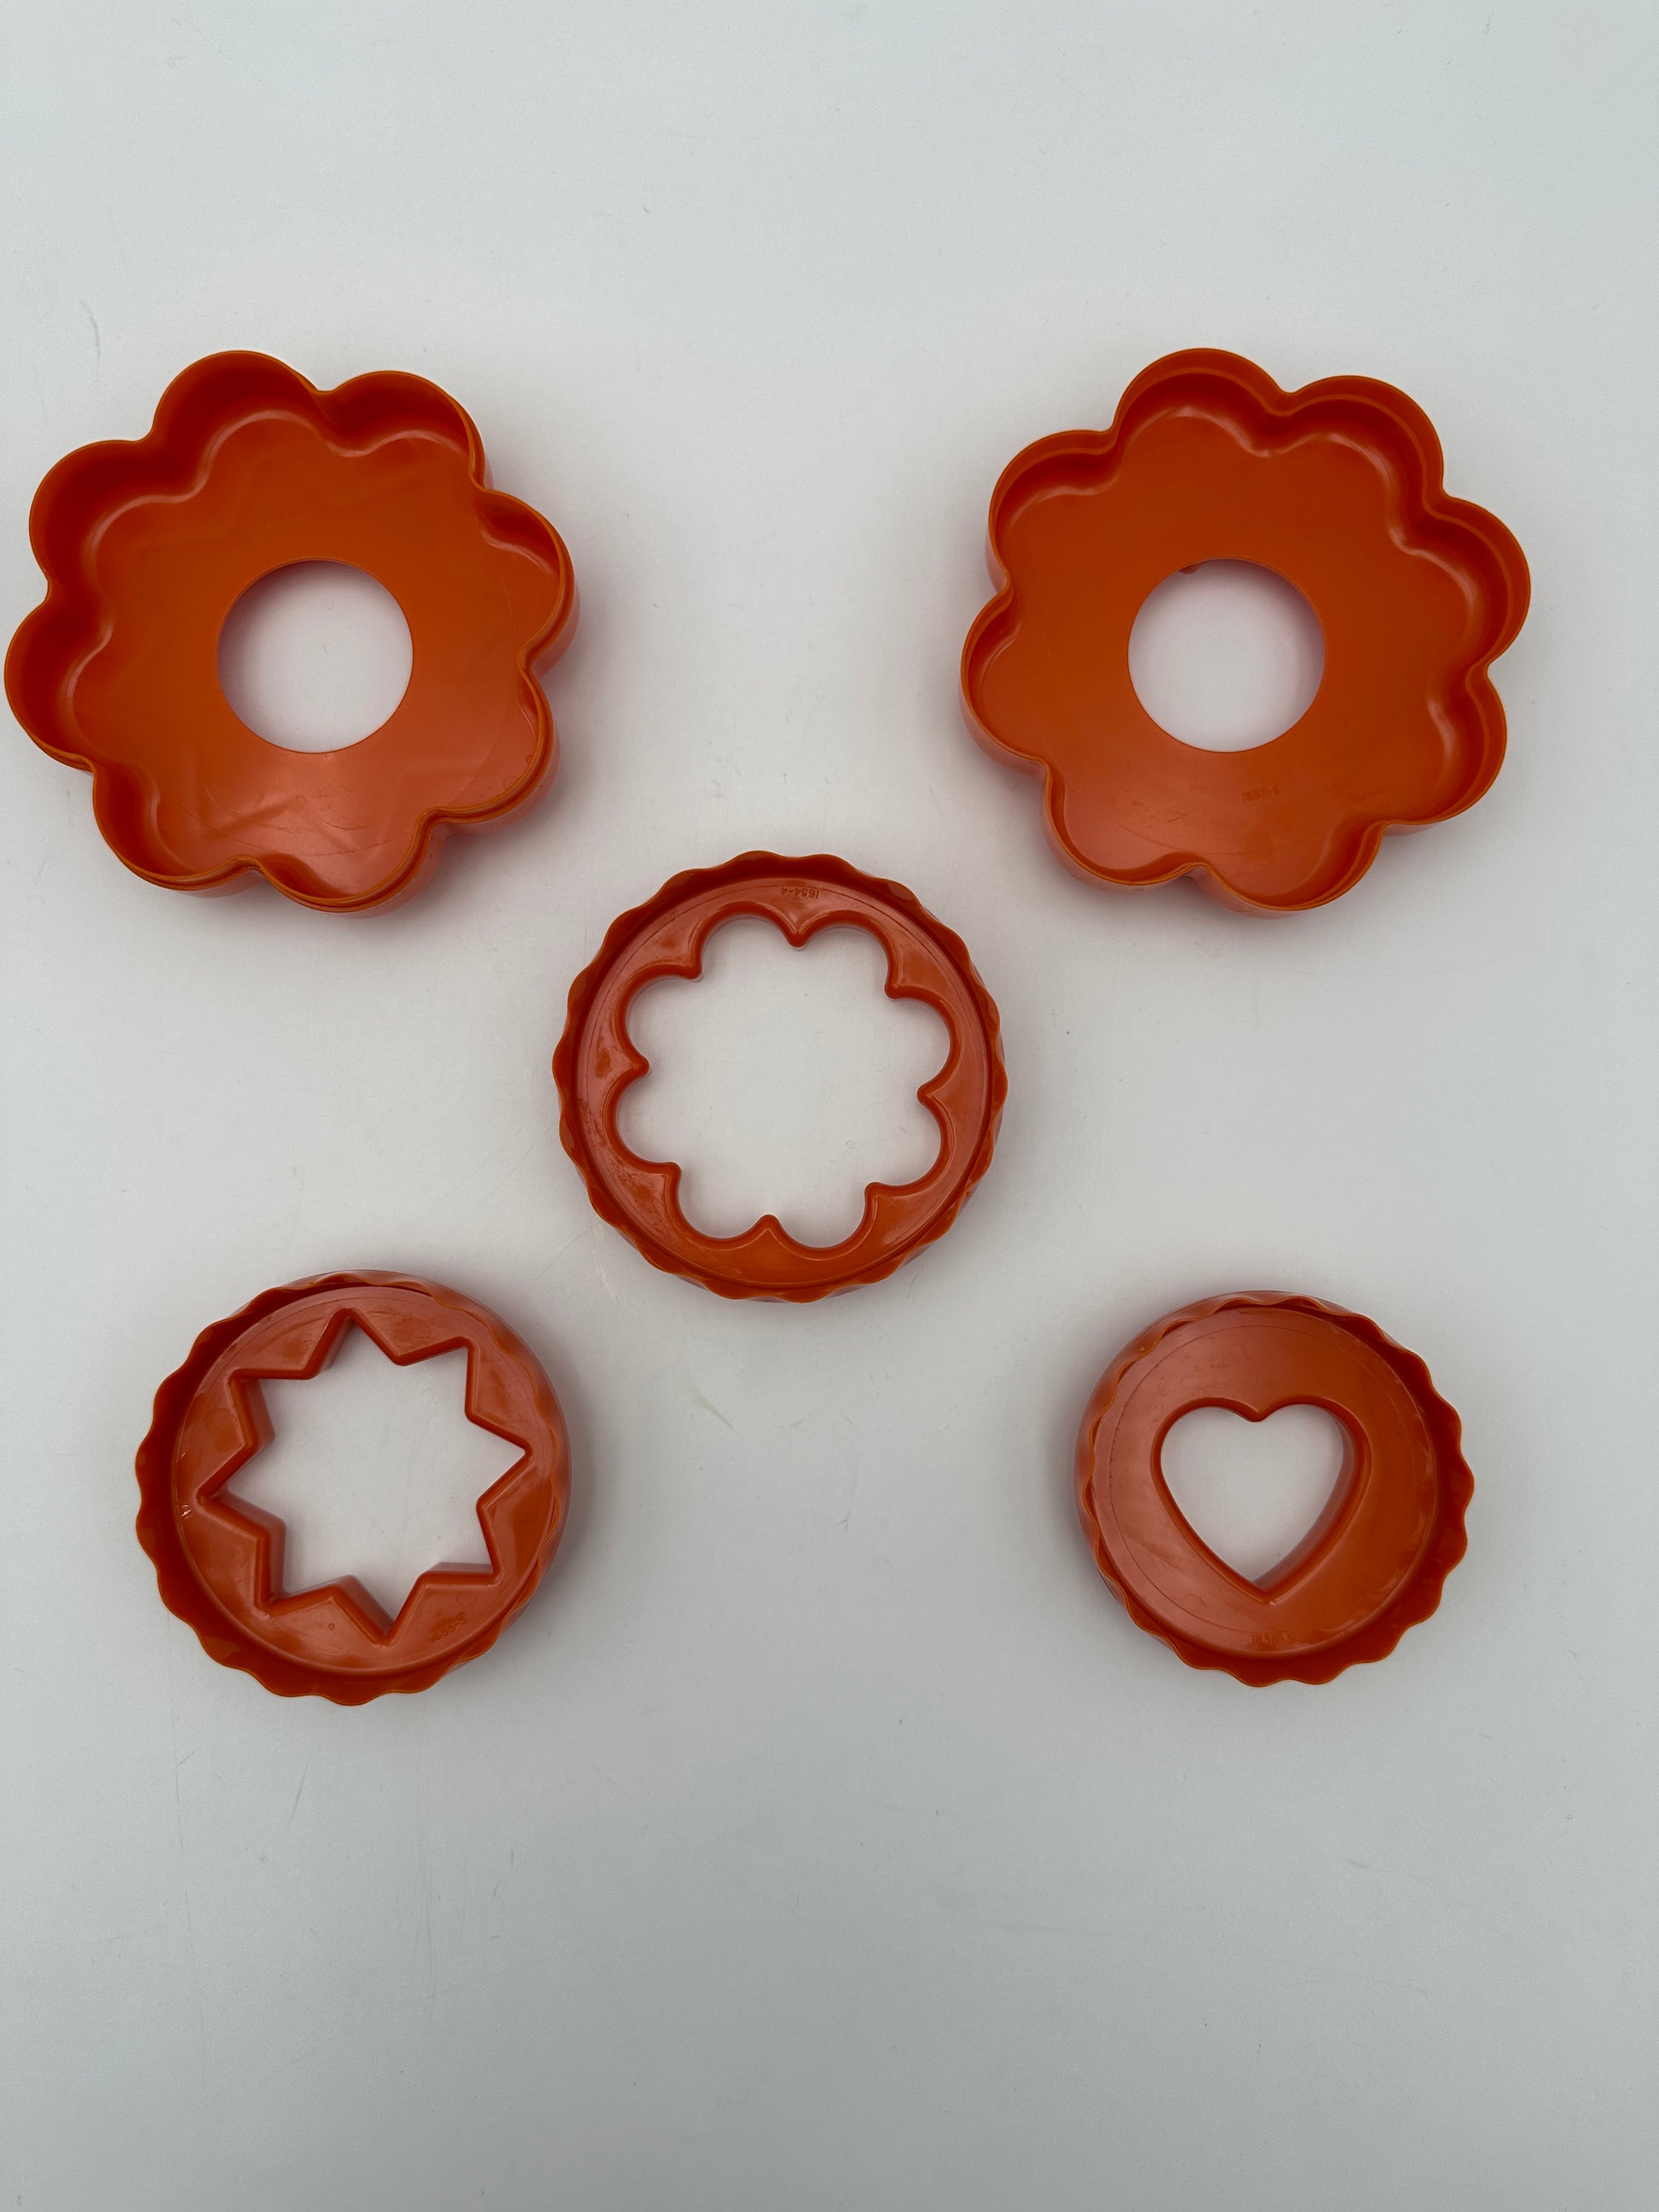 Tupperware Orange Plastic Vintage Nesting Cookie Cutter Set, 5 pcs